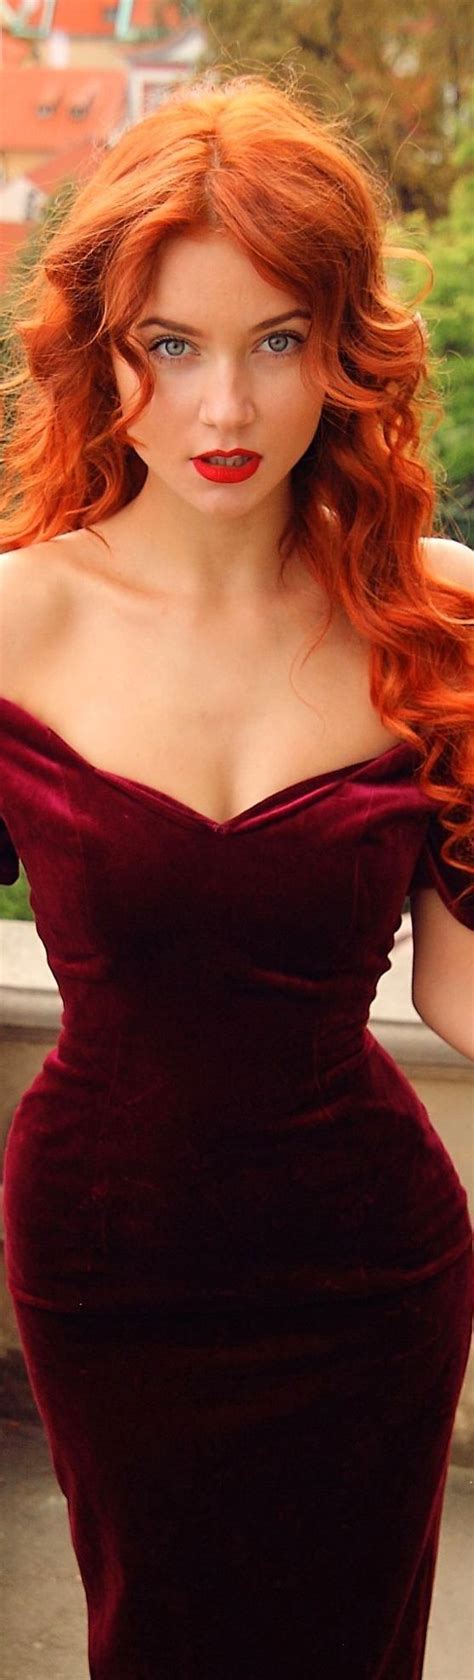 Pin By Vili Kandilarova On Charmr S Man S Kryptonite Red Hair Woman Beautiful Red Hair